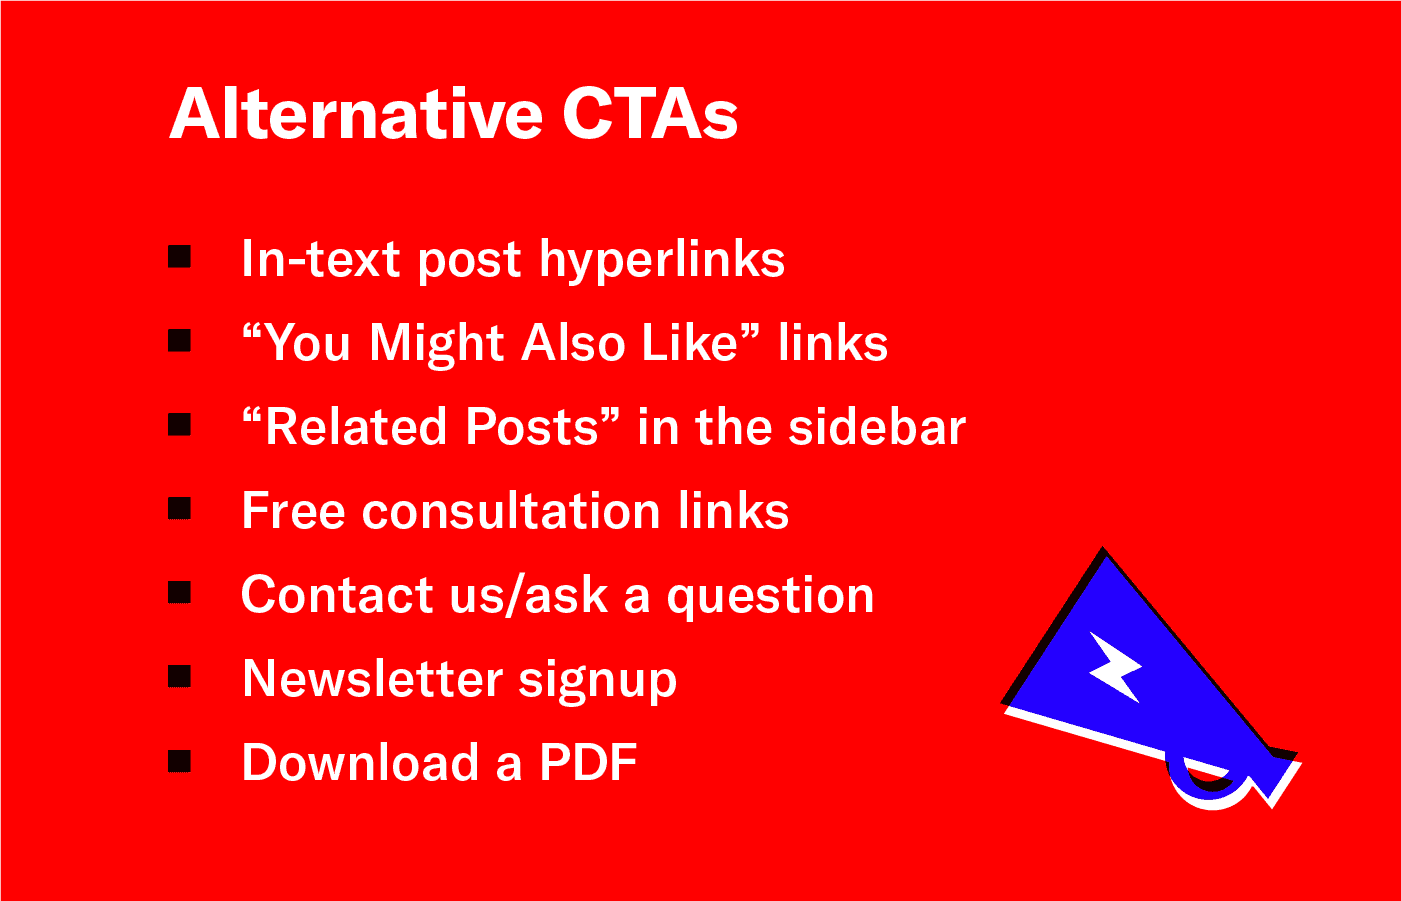 A list of alternative CTA examples.